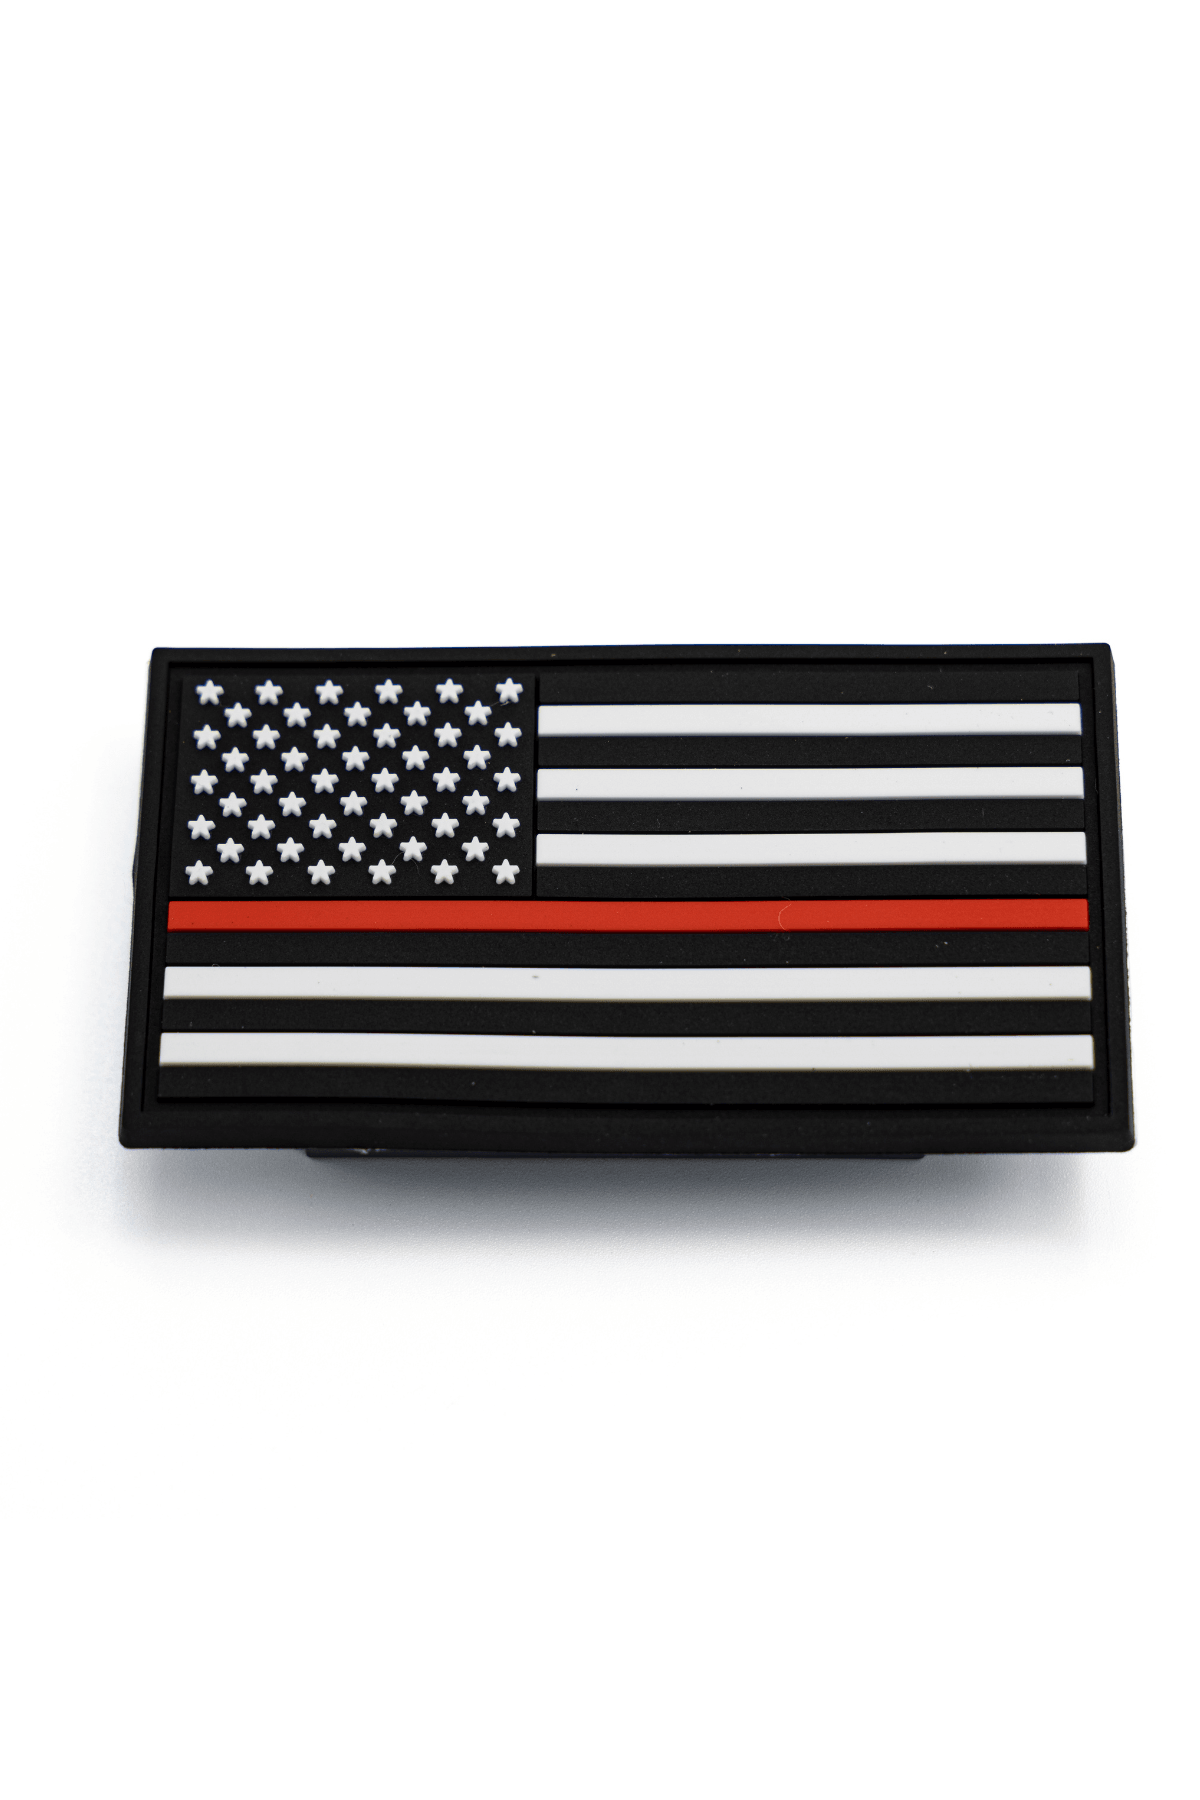 USA FLAG THIN RED LINE PVC PATCH - Cowboy Snapback